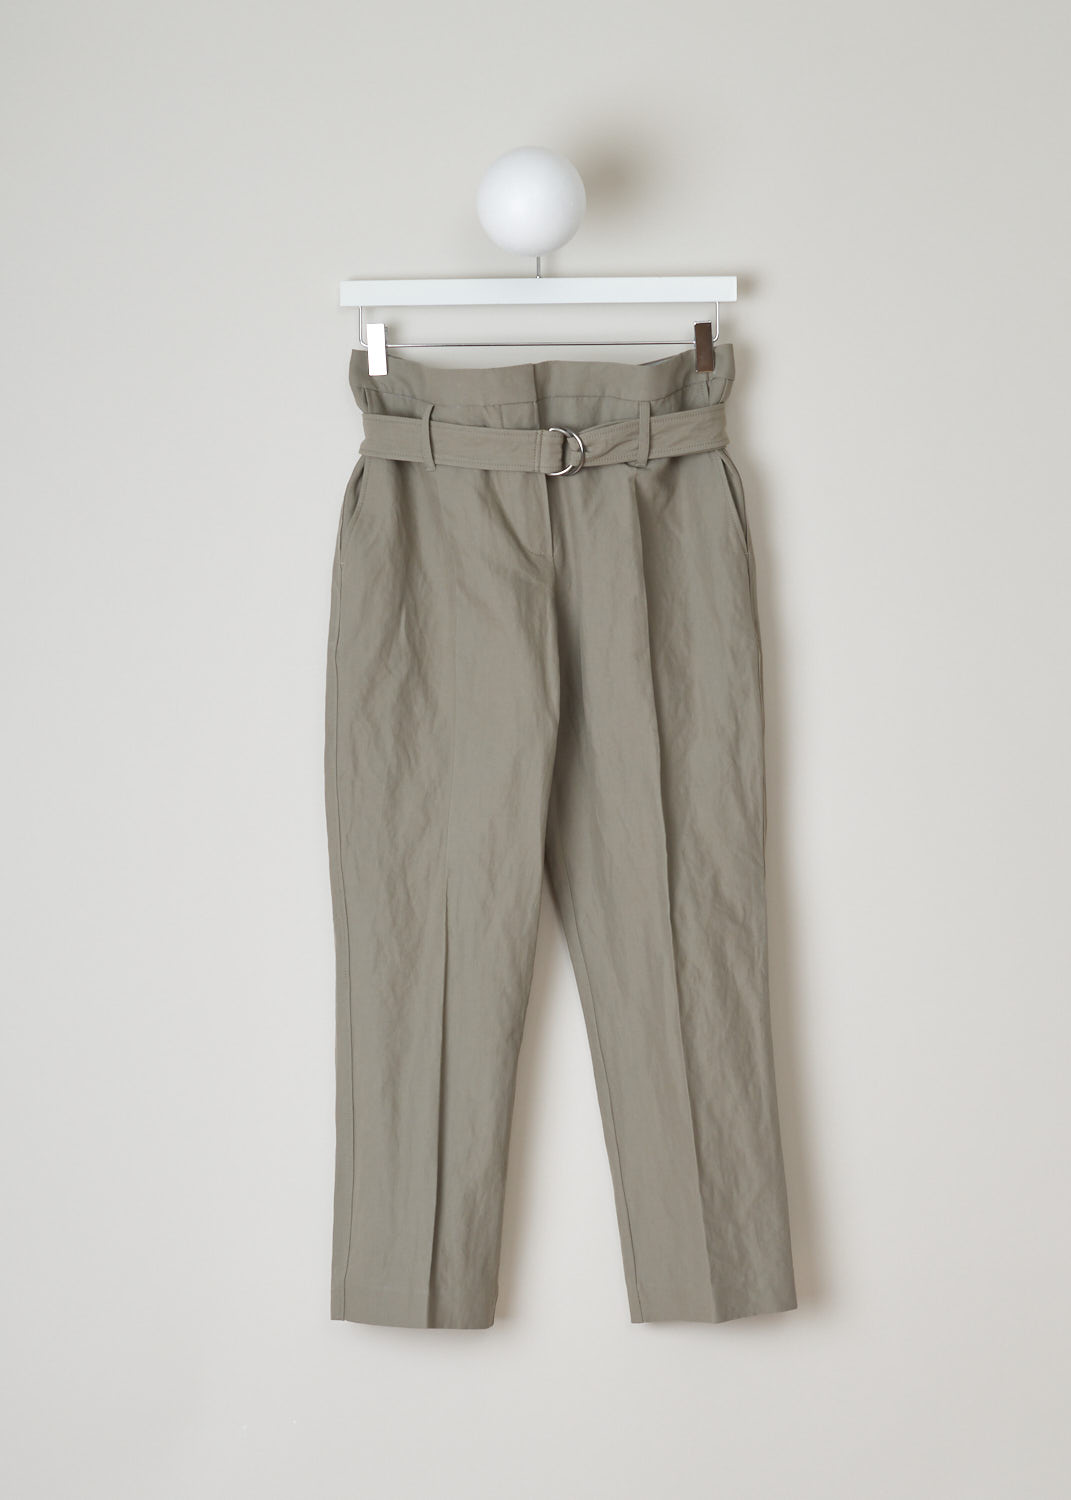 Khaki Pants - High Waist Paperbag Pants - Button Dly Closure